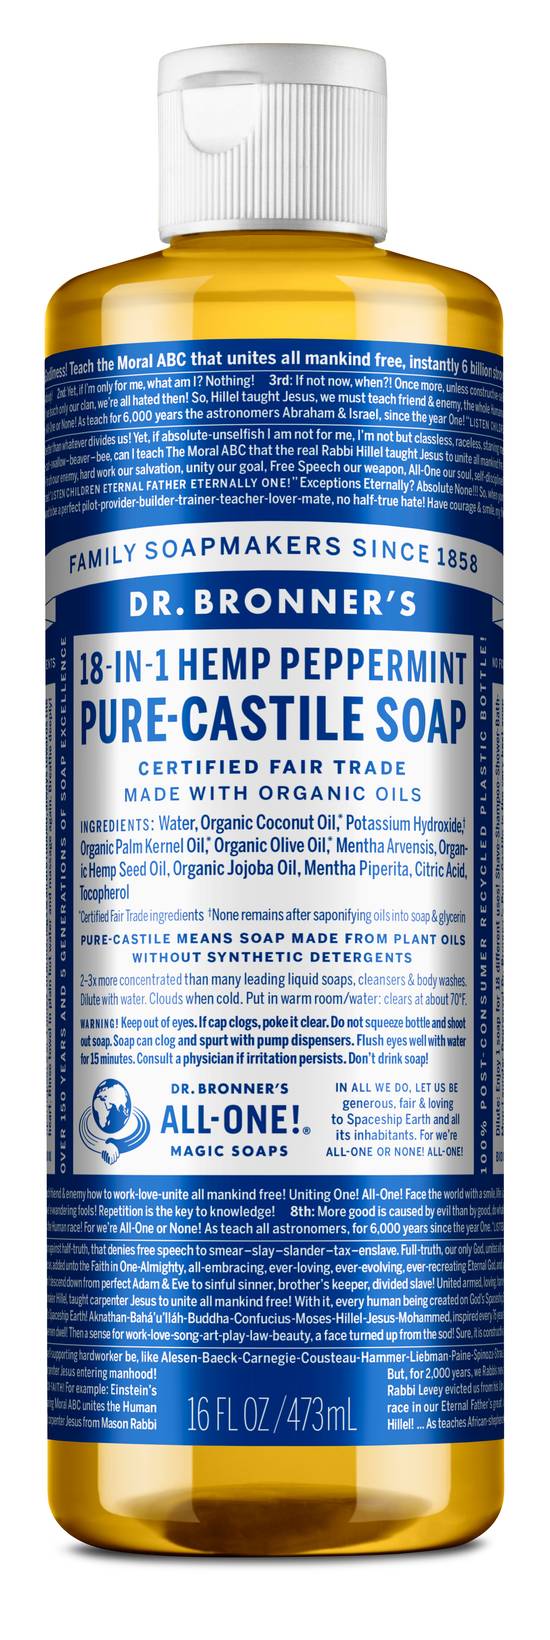 Dr. Bronner's Pure-Castile Soap 18-in-1 Hemp Peppermint (16 oz)